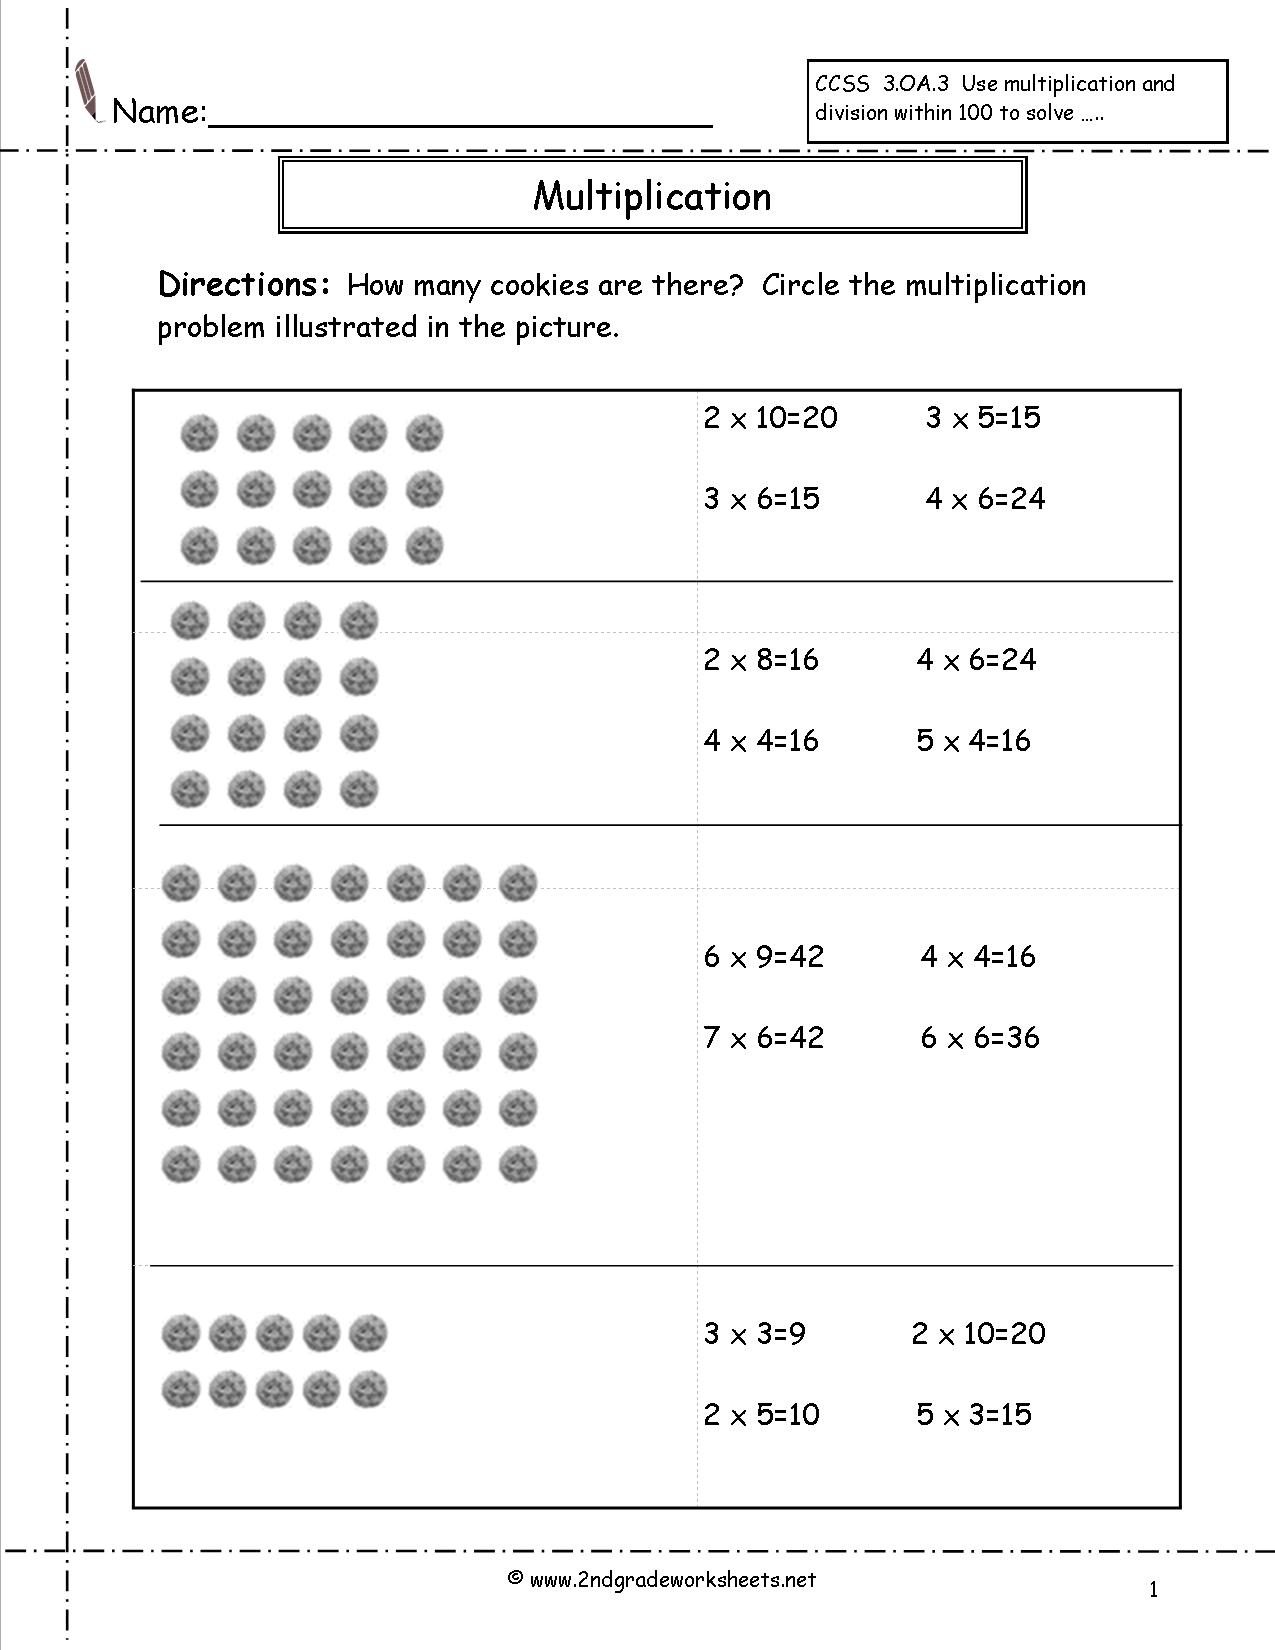 fun-multiplication-games-multiplication-activities-fun-math-math-worksheets-math-resources